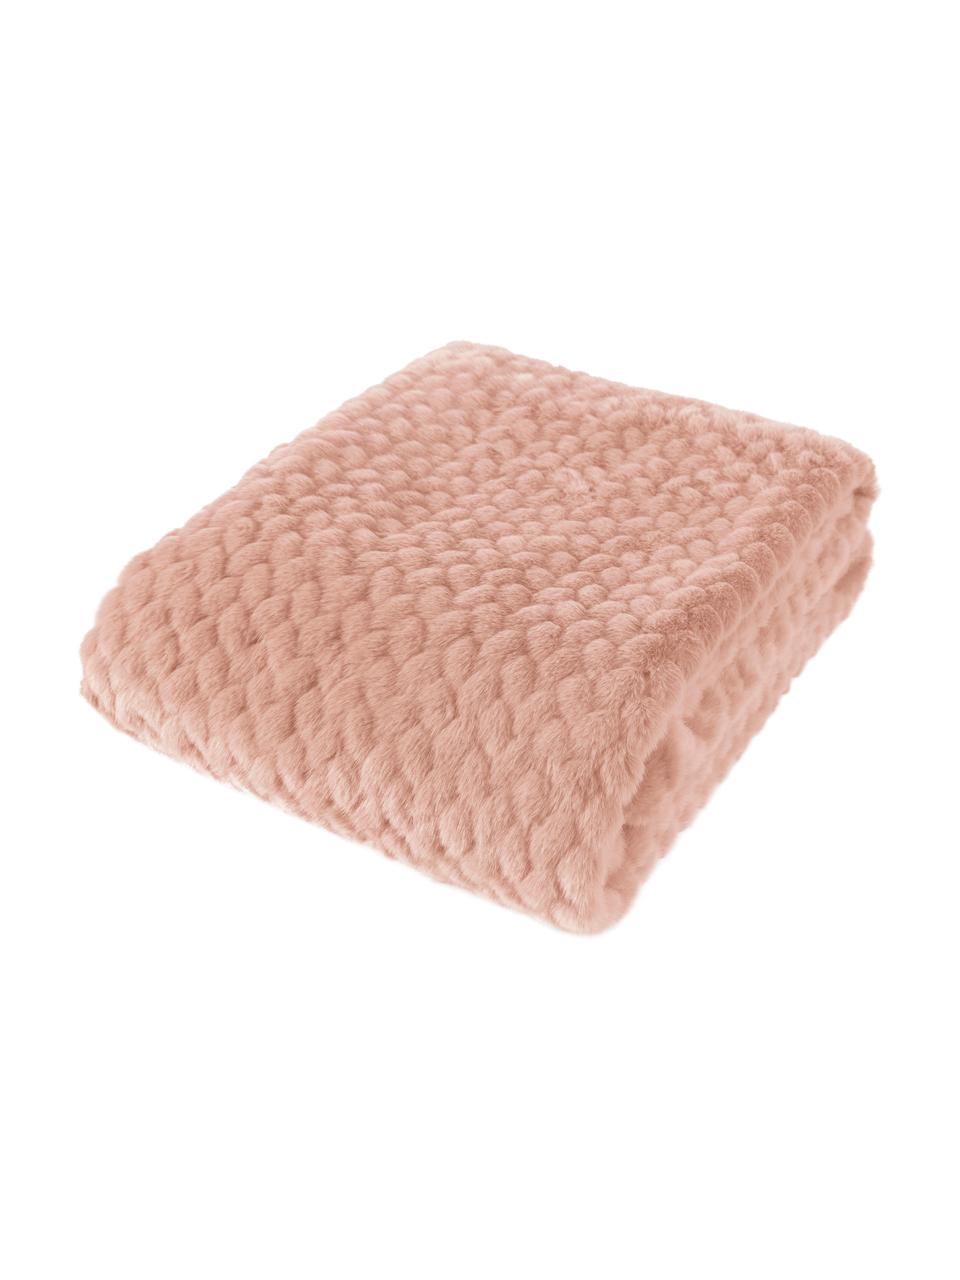 Knuffeldeken Mink van geweven bont in roze, Bovenzijde: 60% polyacryl, 40% polyes, Onderzijde: 100% polyester, Roze, 150 x 200 cm